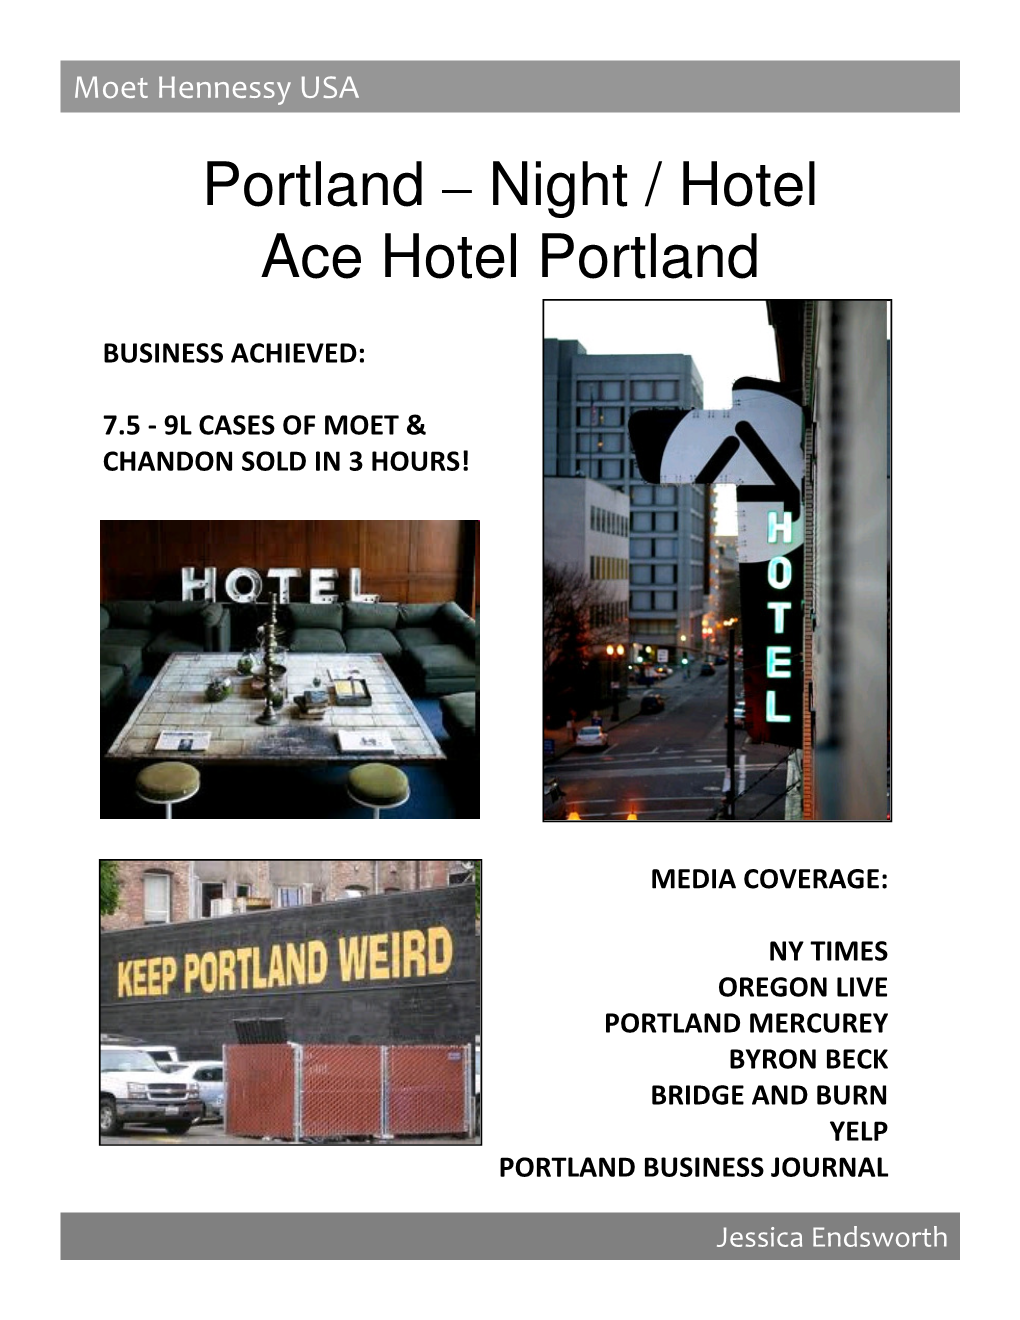 Night / Hotel Ace Hotel Portland